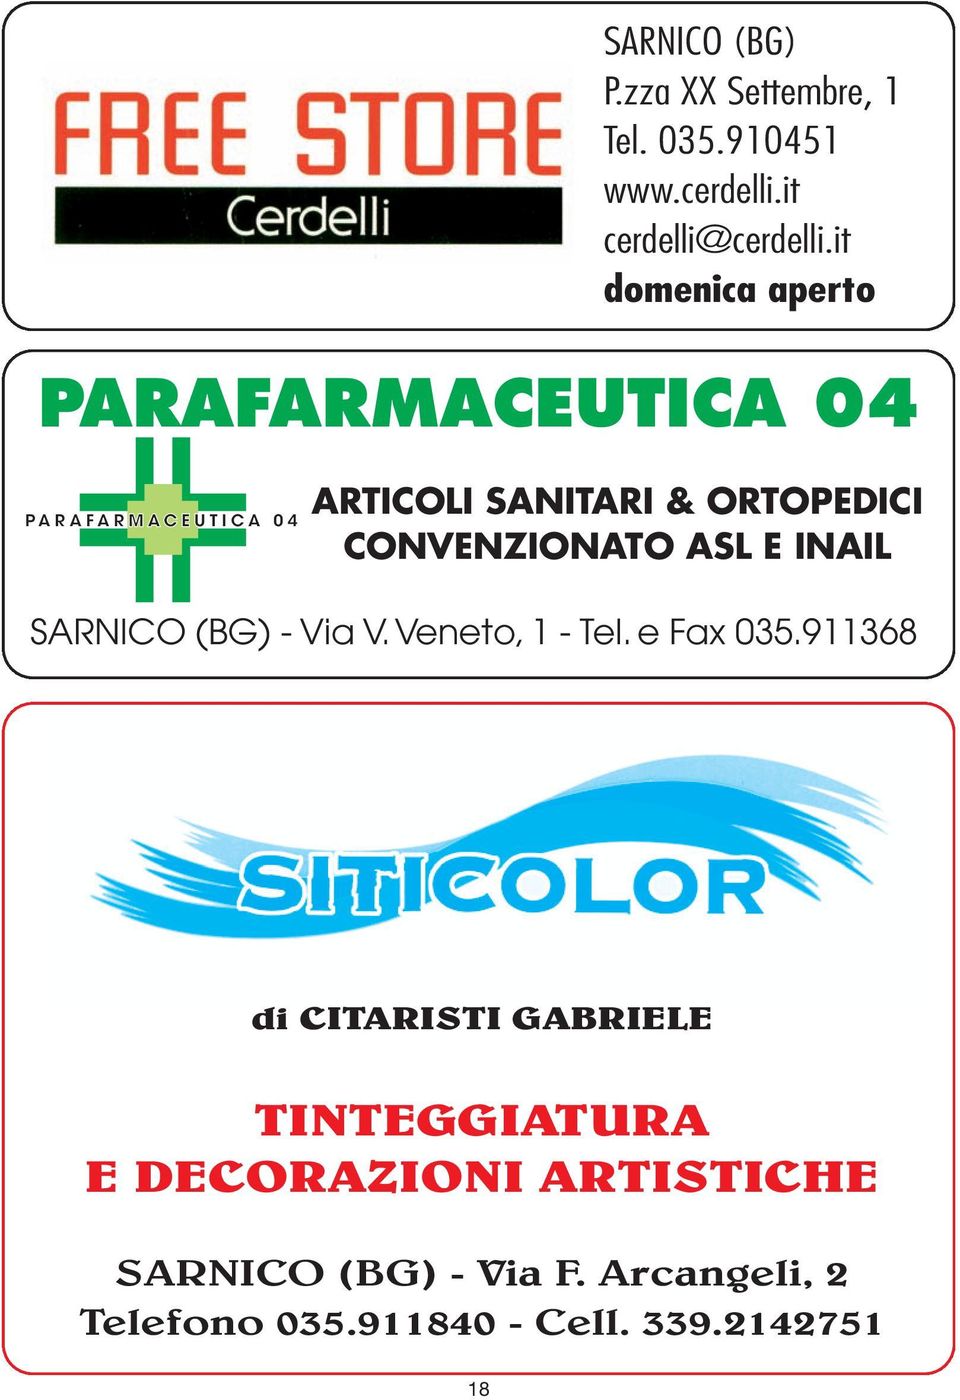 INAIL SARNICO (BG) - Via V. Veneto, 1 - Tel. e Fax 035.